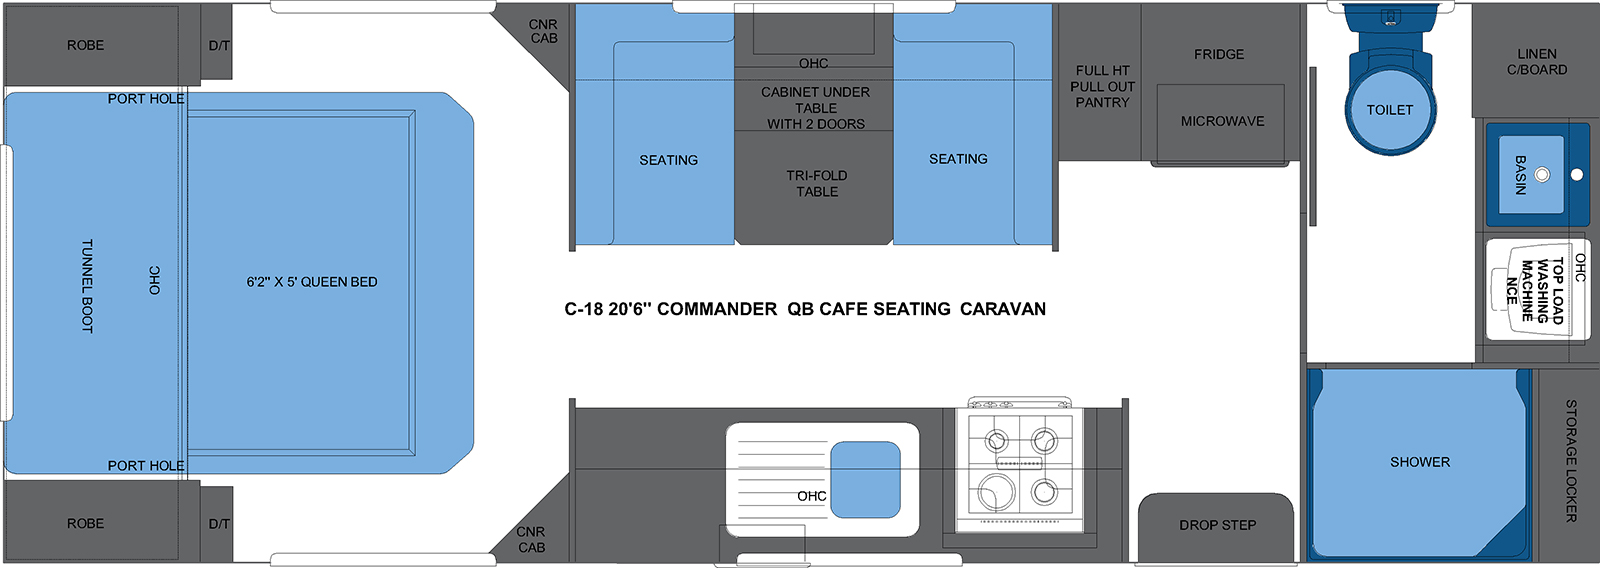 C-18 20'6 COMMANDER QB CAFE SEATING CARAVAN